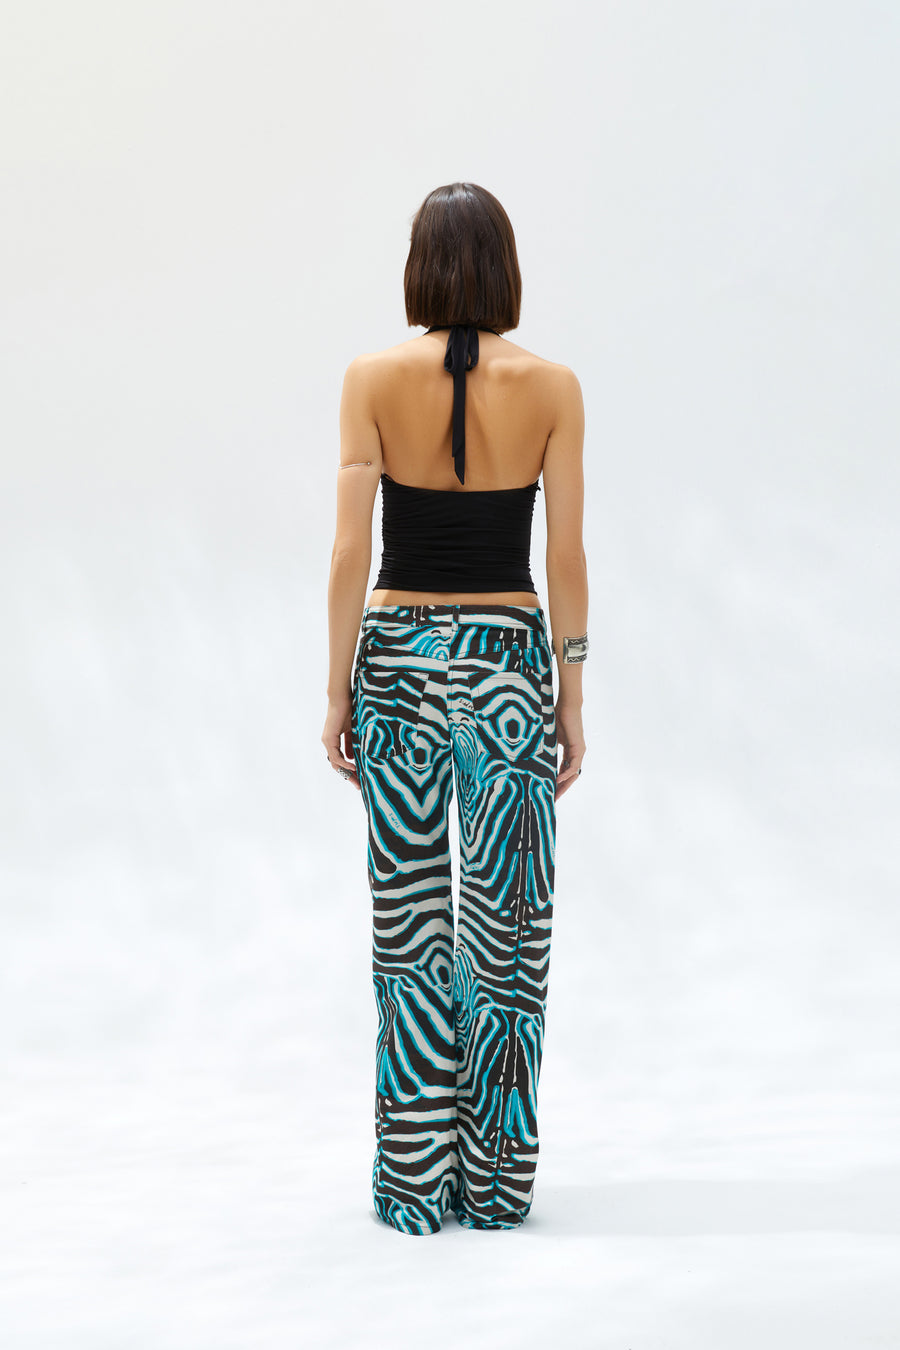 ESSIE - Low-rise wide-leg zebra printed pants